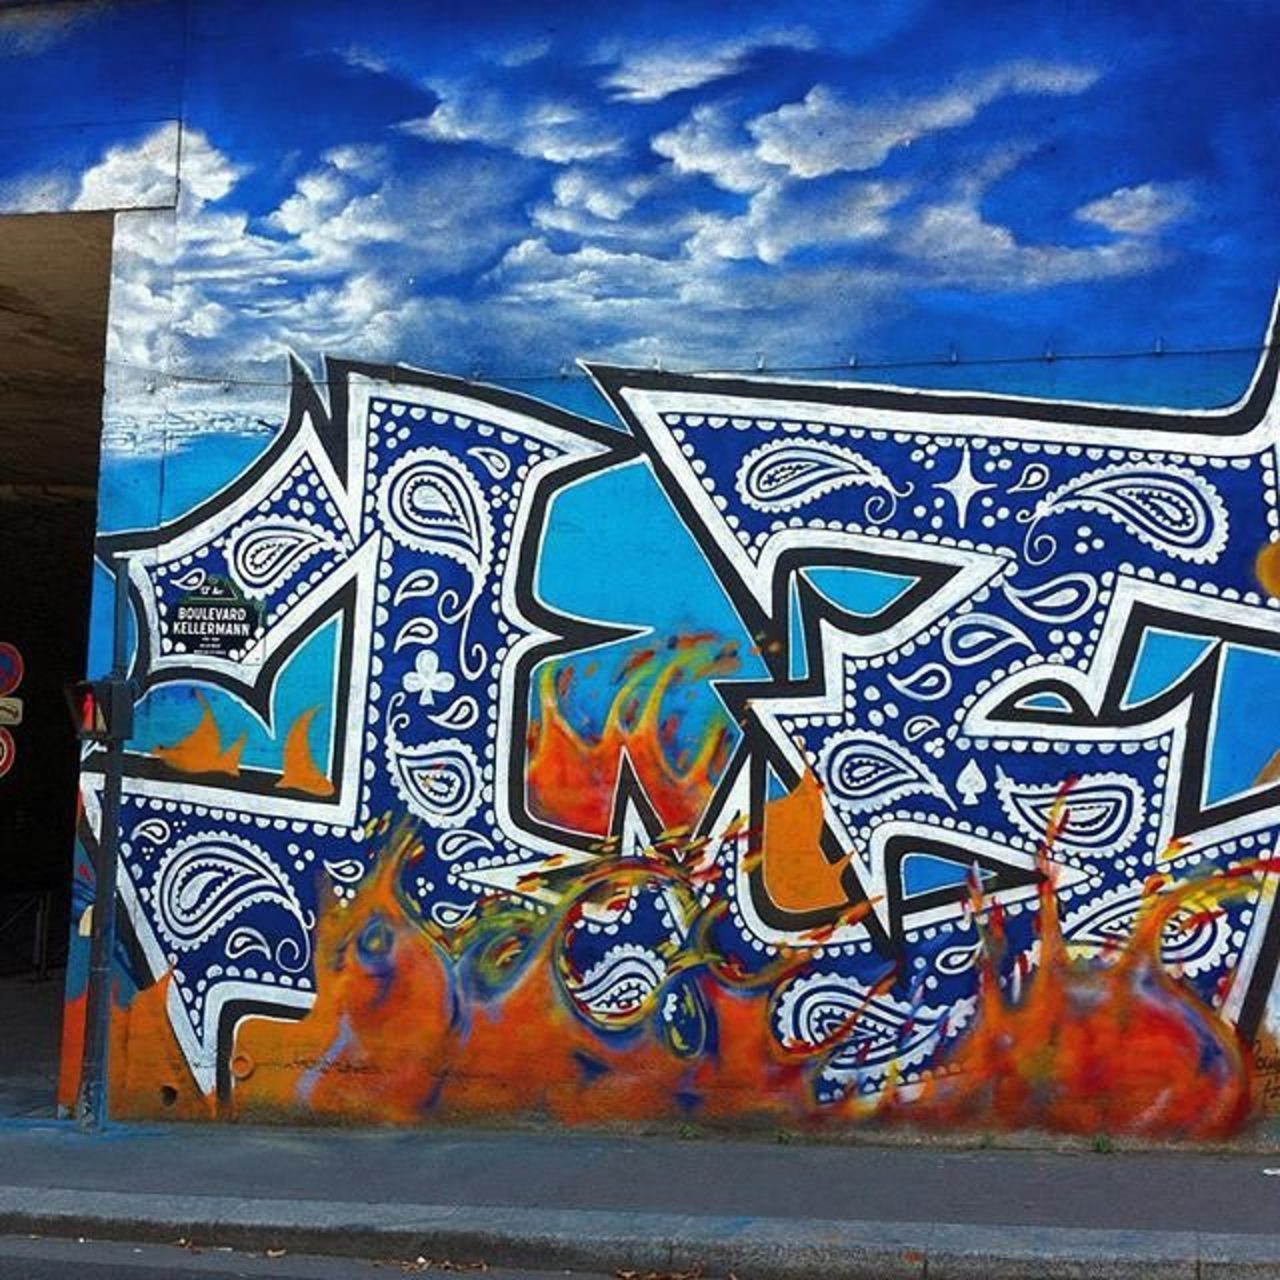 #streetart #streetarteverywhere #streetshot #graffitiart #graffiti #arturbain #urbanart  #mur #mural #wall #wallart… https://t.co/7y6sR3pMtE